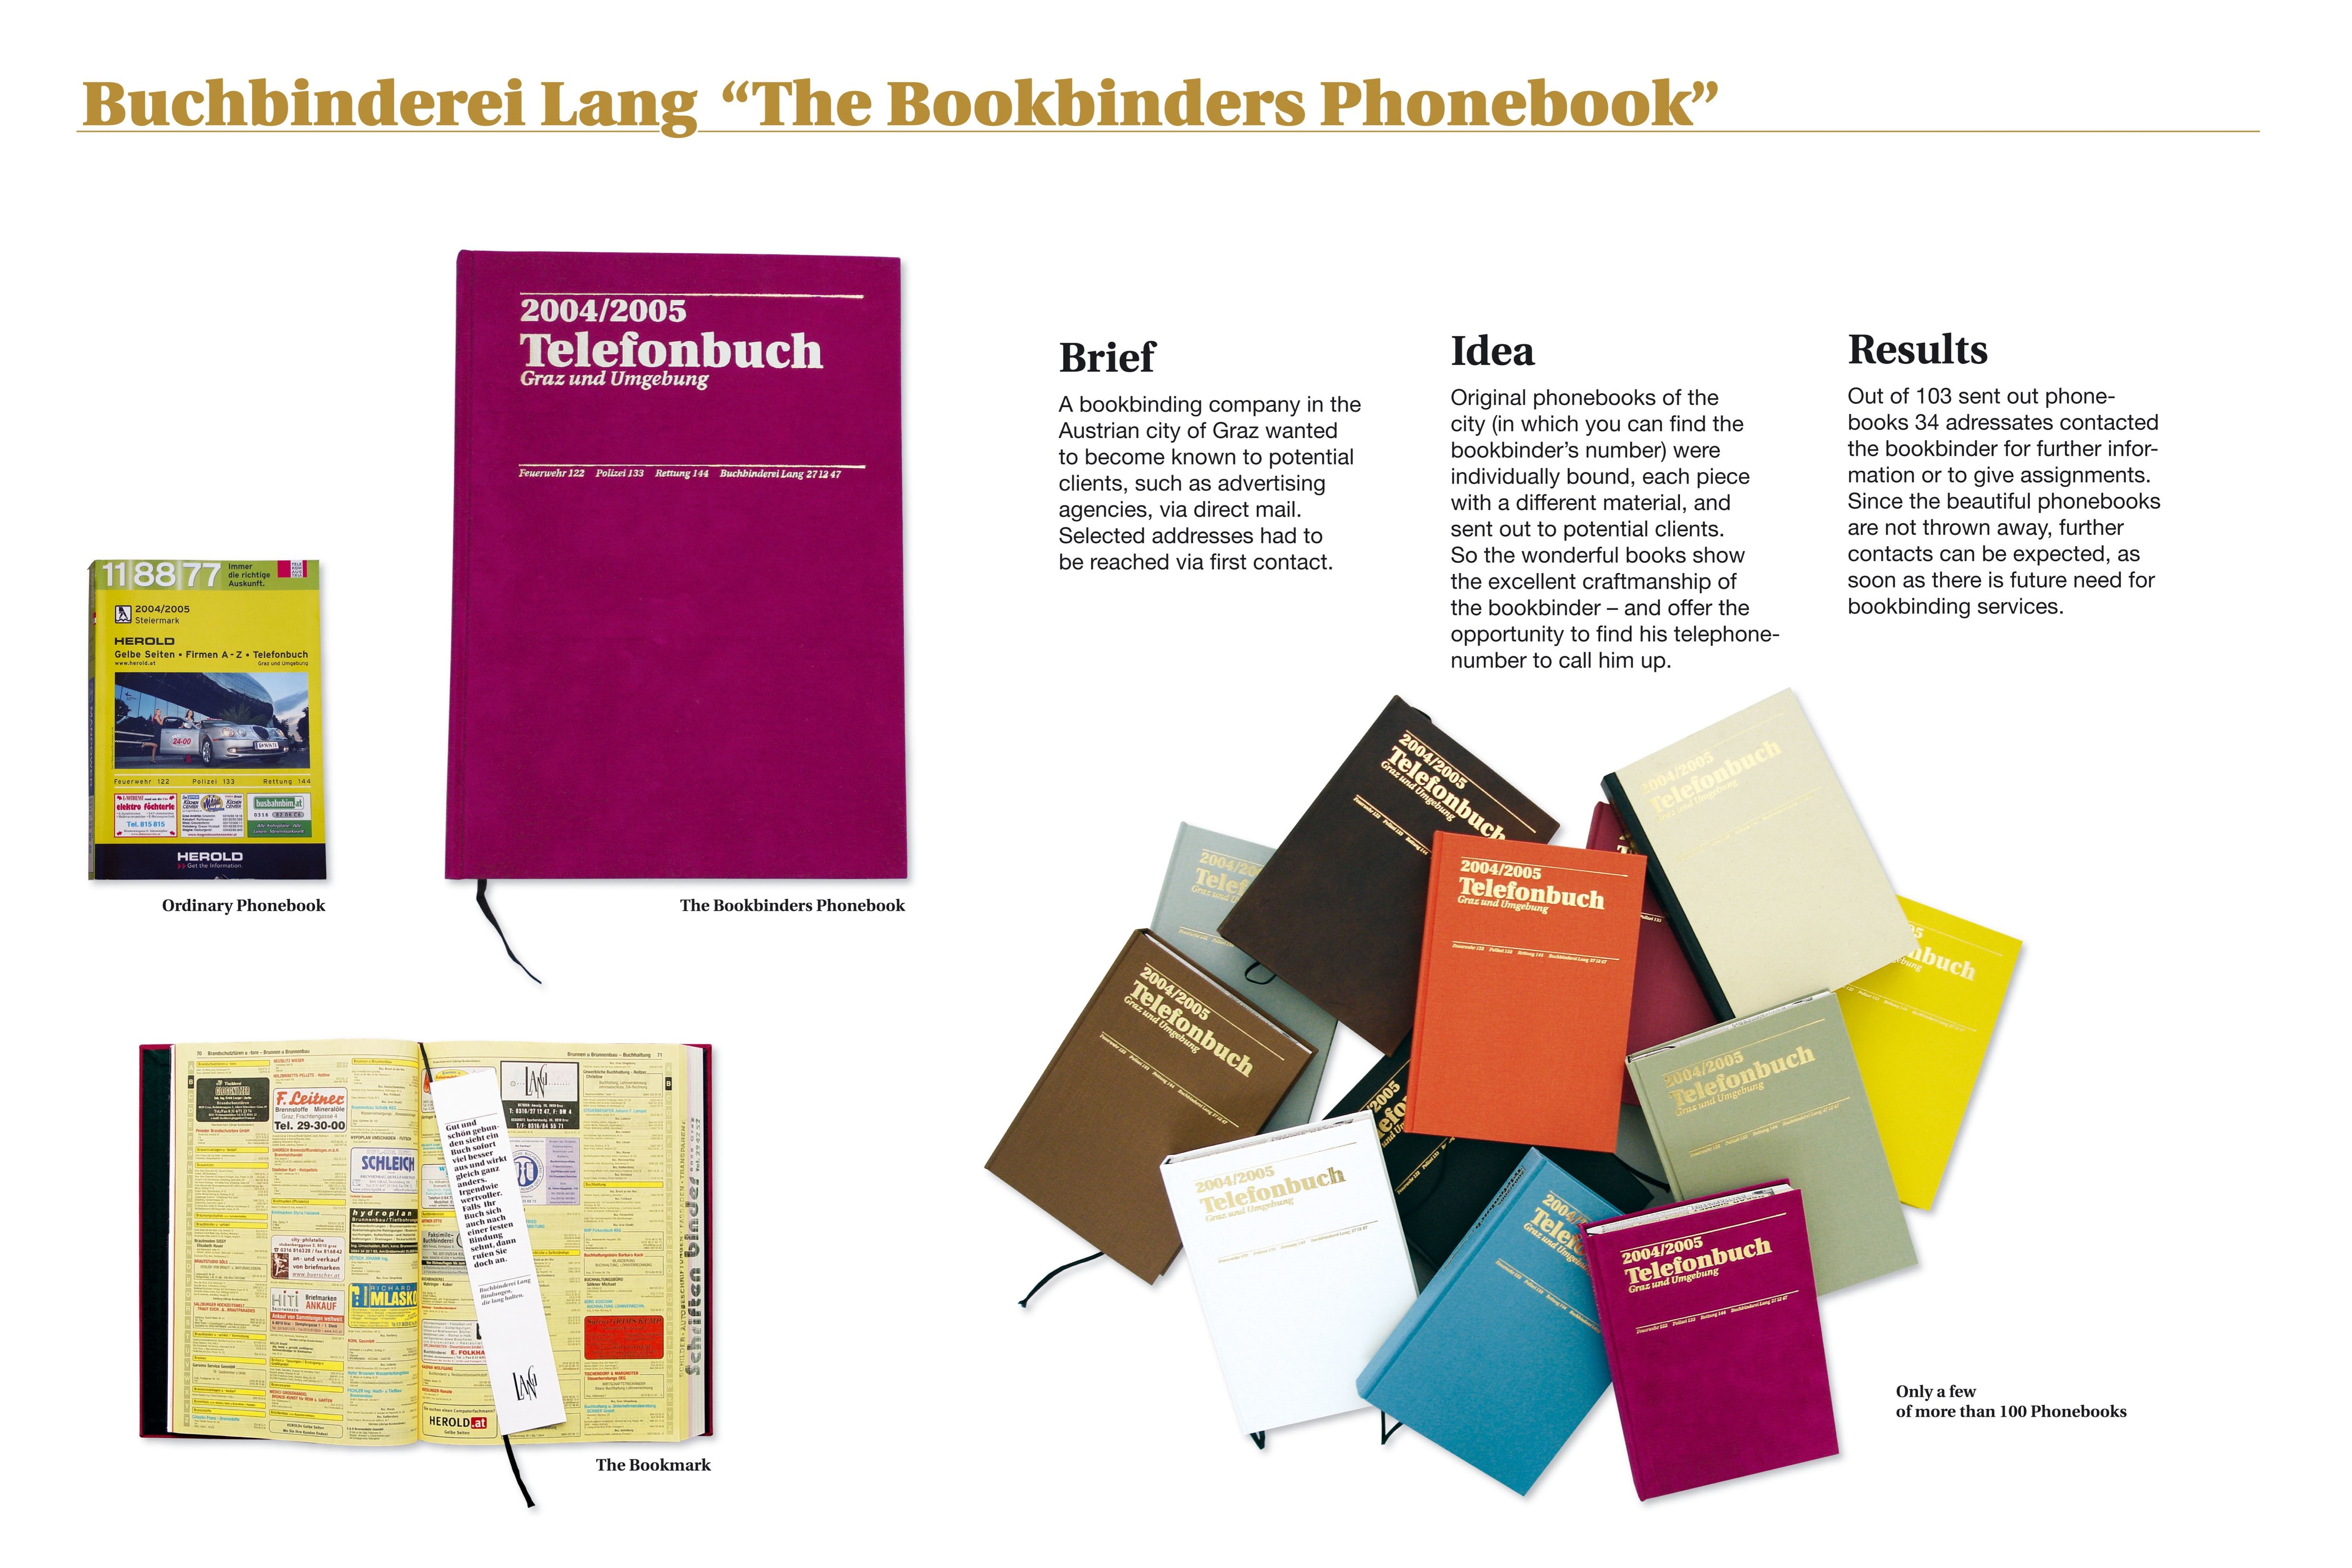 THE BOOKBINDER'S PHONEBOOK